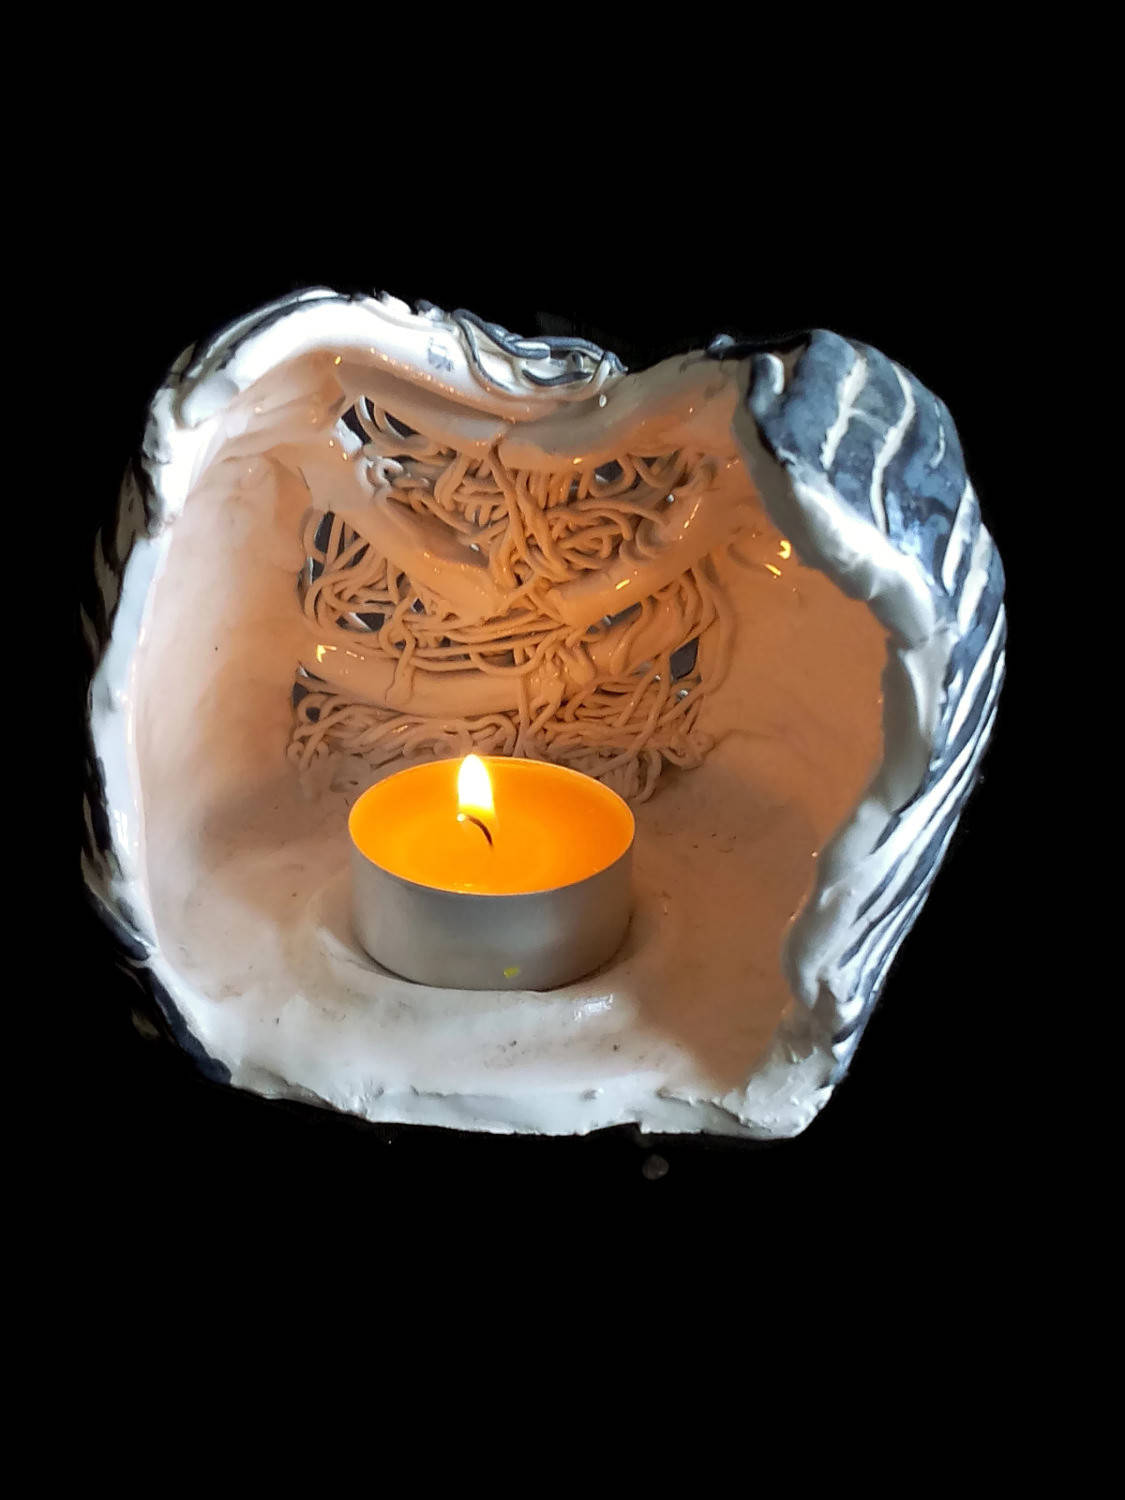 Black And White Handmade Ceramic Candle Holder For Home Decor, Artisan Votive Candle Holder, Abstract Tea Light Holder Gift Idea For Women - Ceramica Ana Rafael